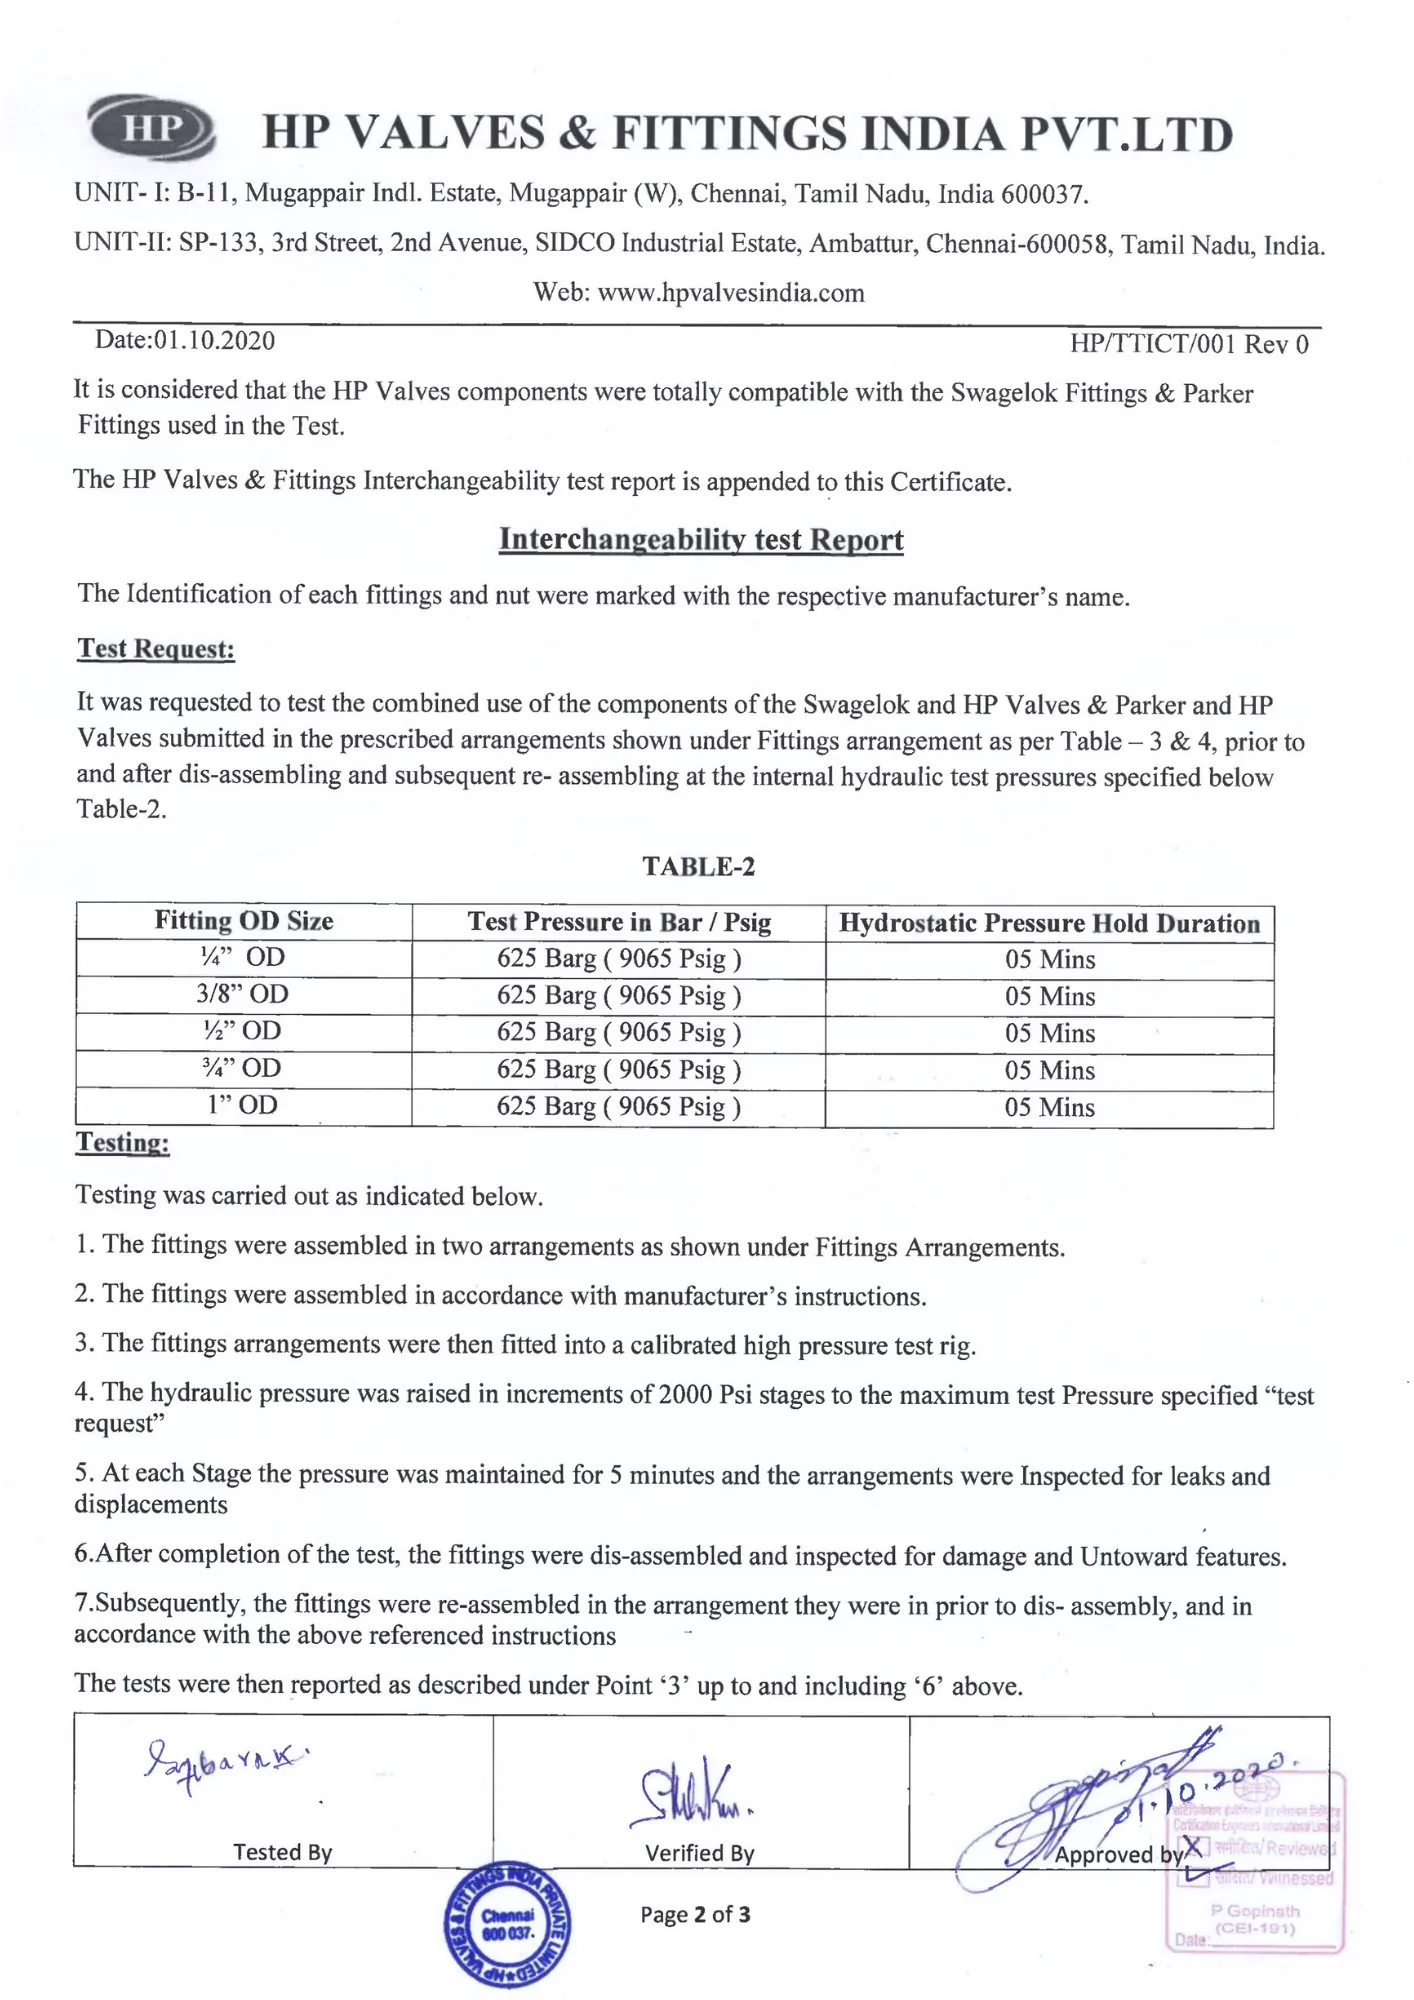 Interchangeability Test Report 2 - Type Test Certificates